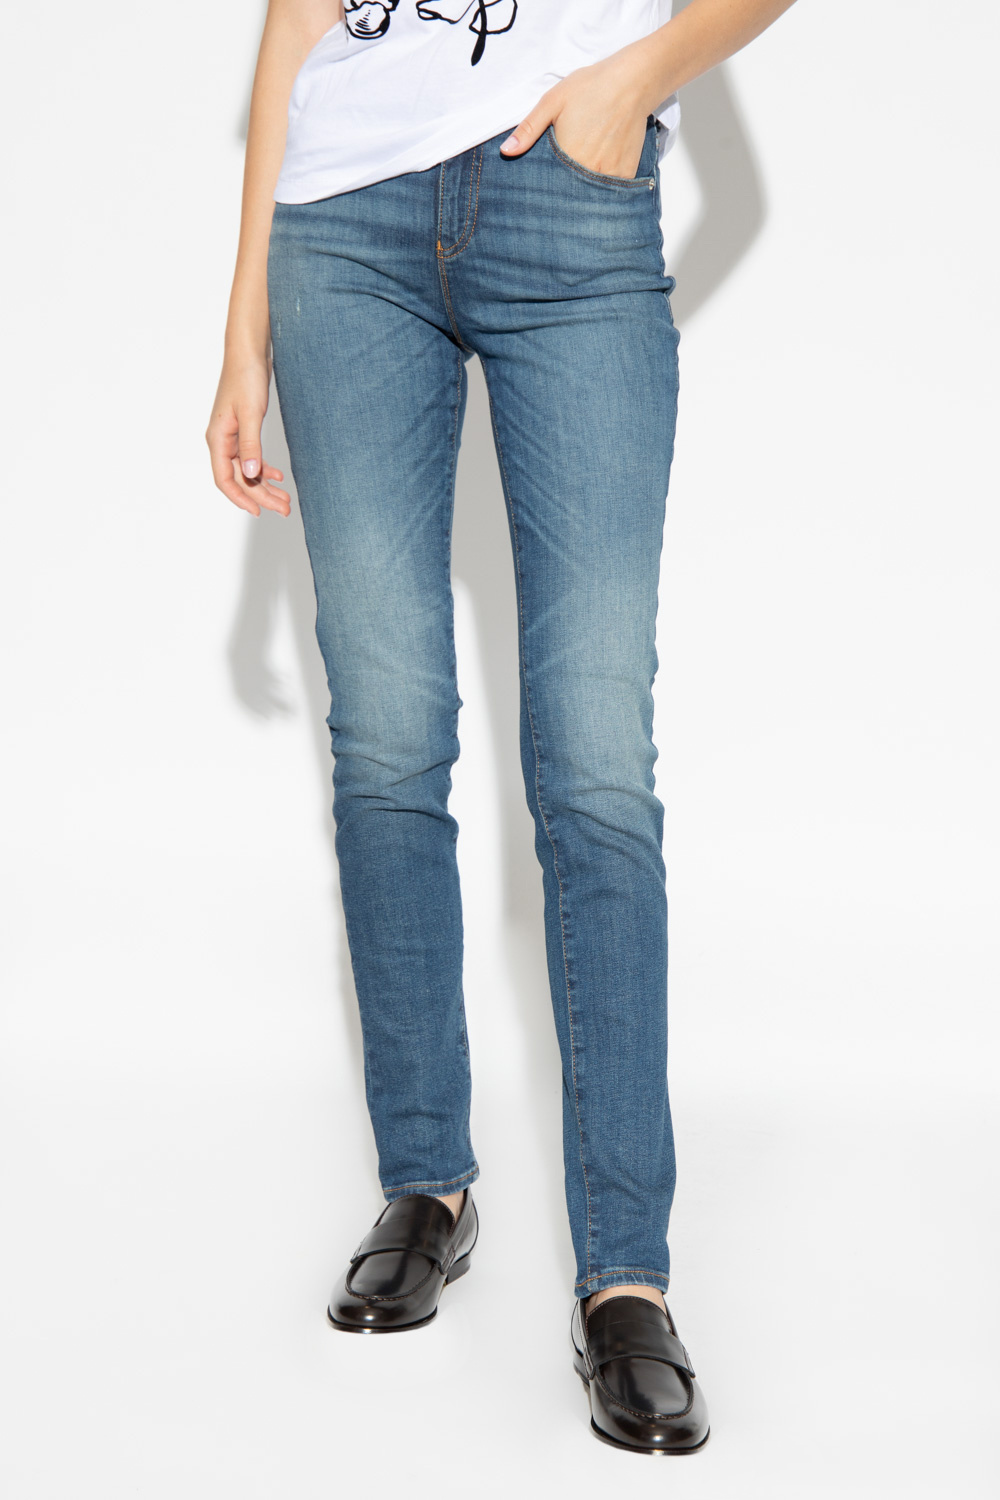 Emporio Armani ‘J18’ slim-fit jeans